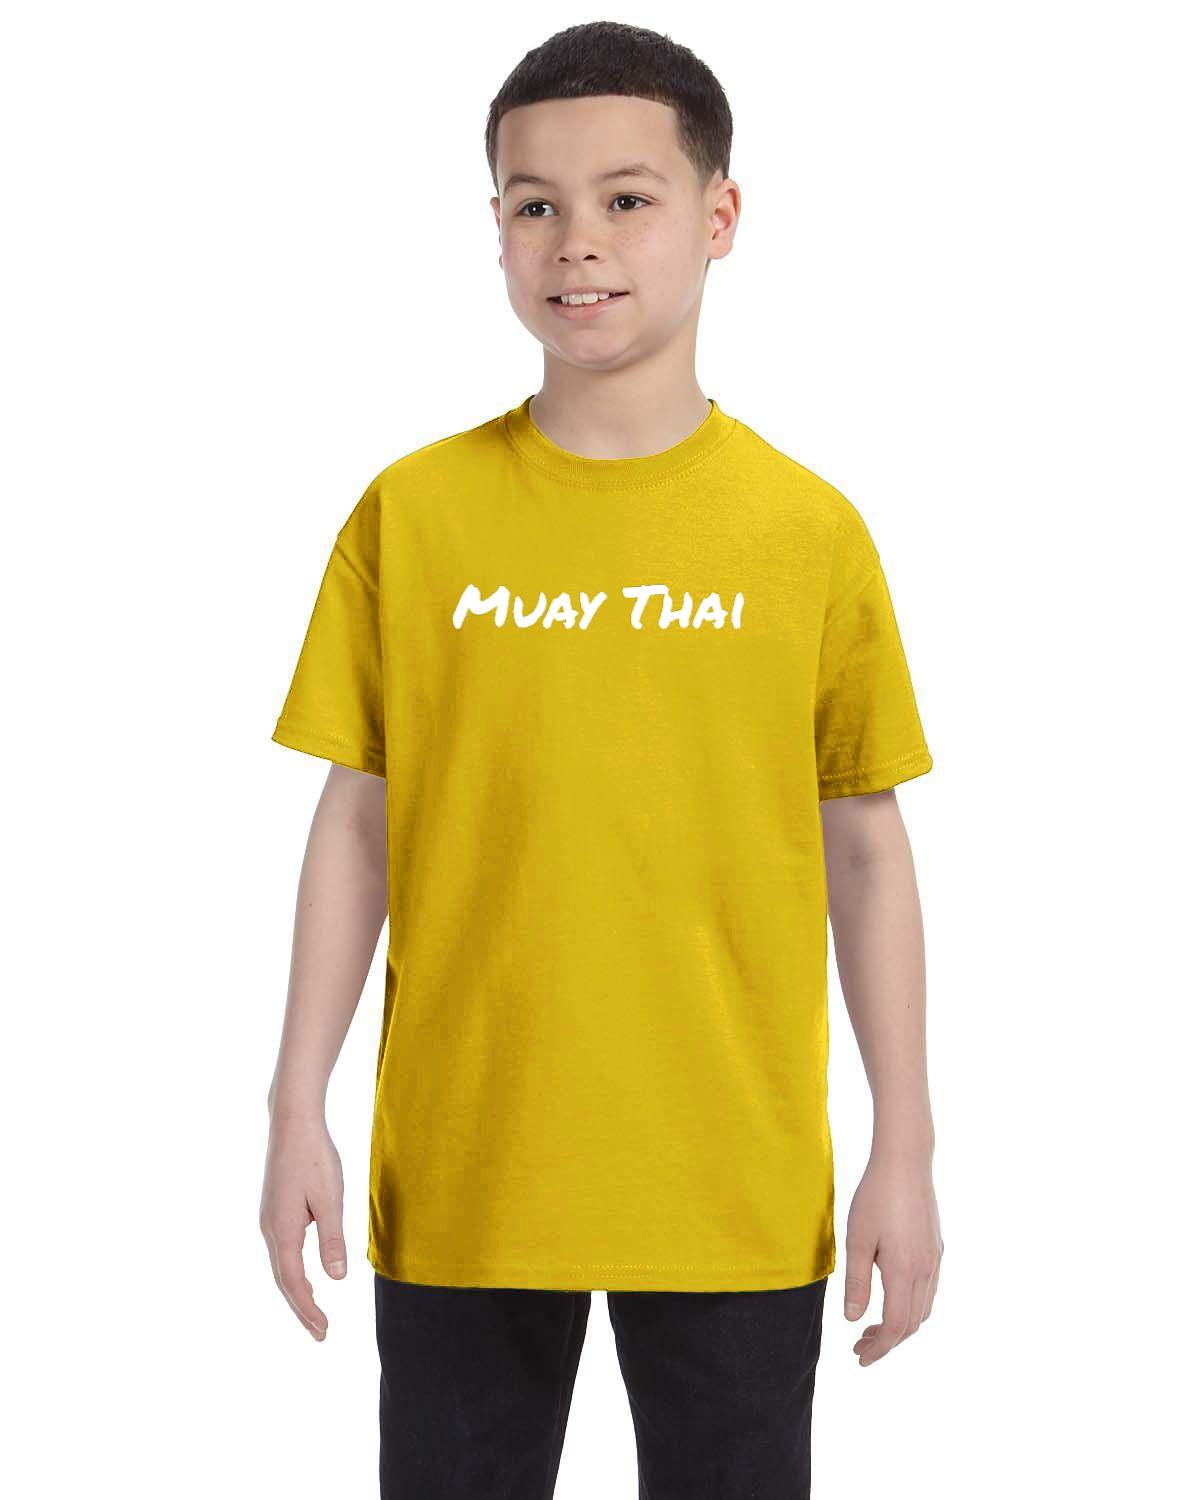 Muay Thai Kids T-Shirt